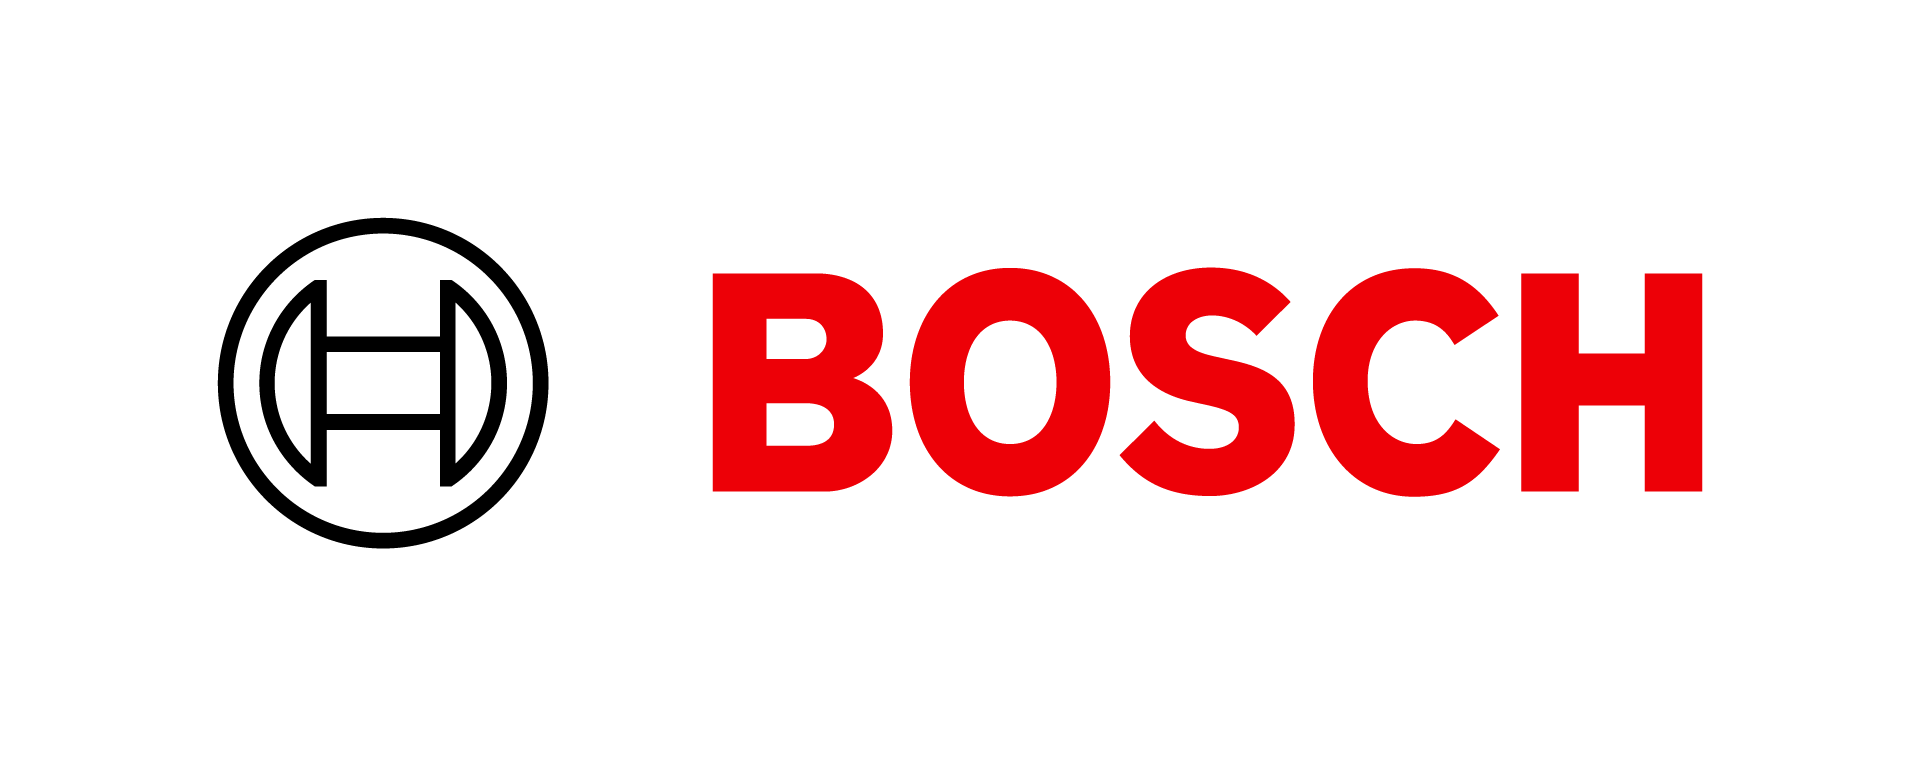 Bosch_symbol_logo_black_red